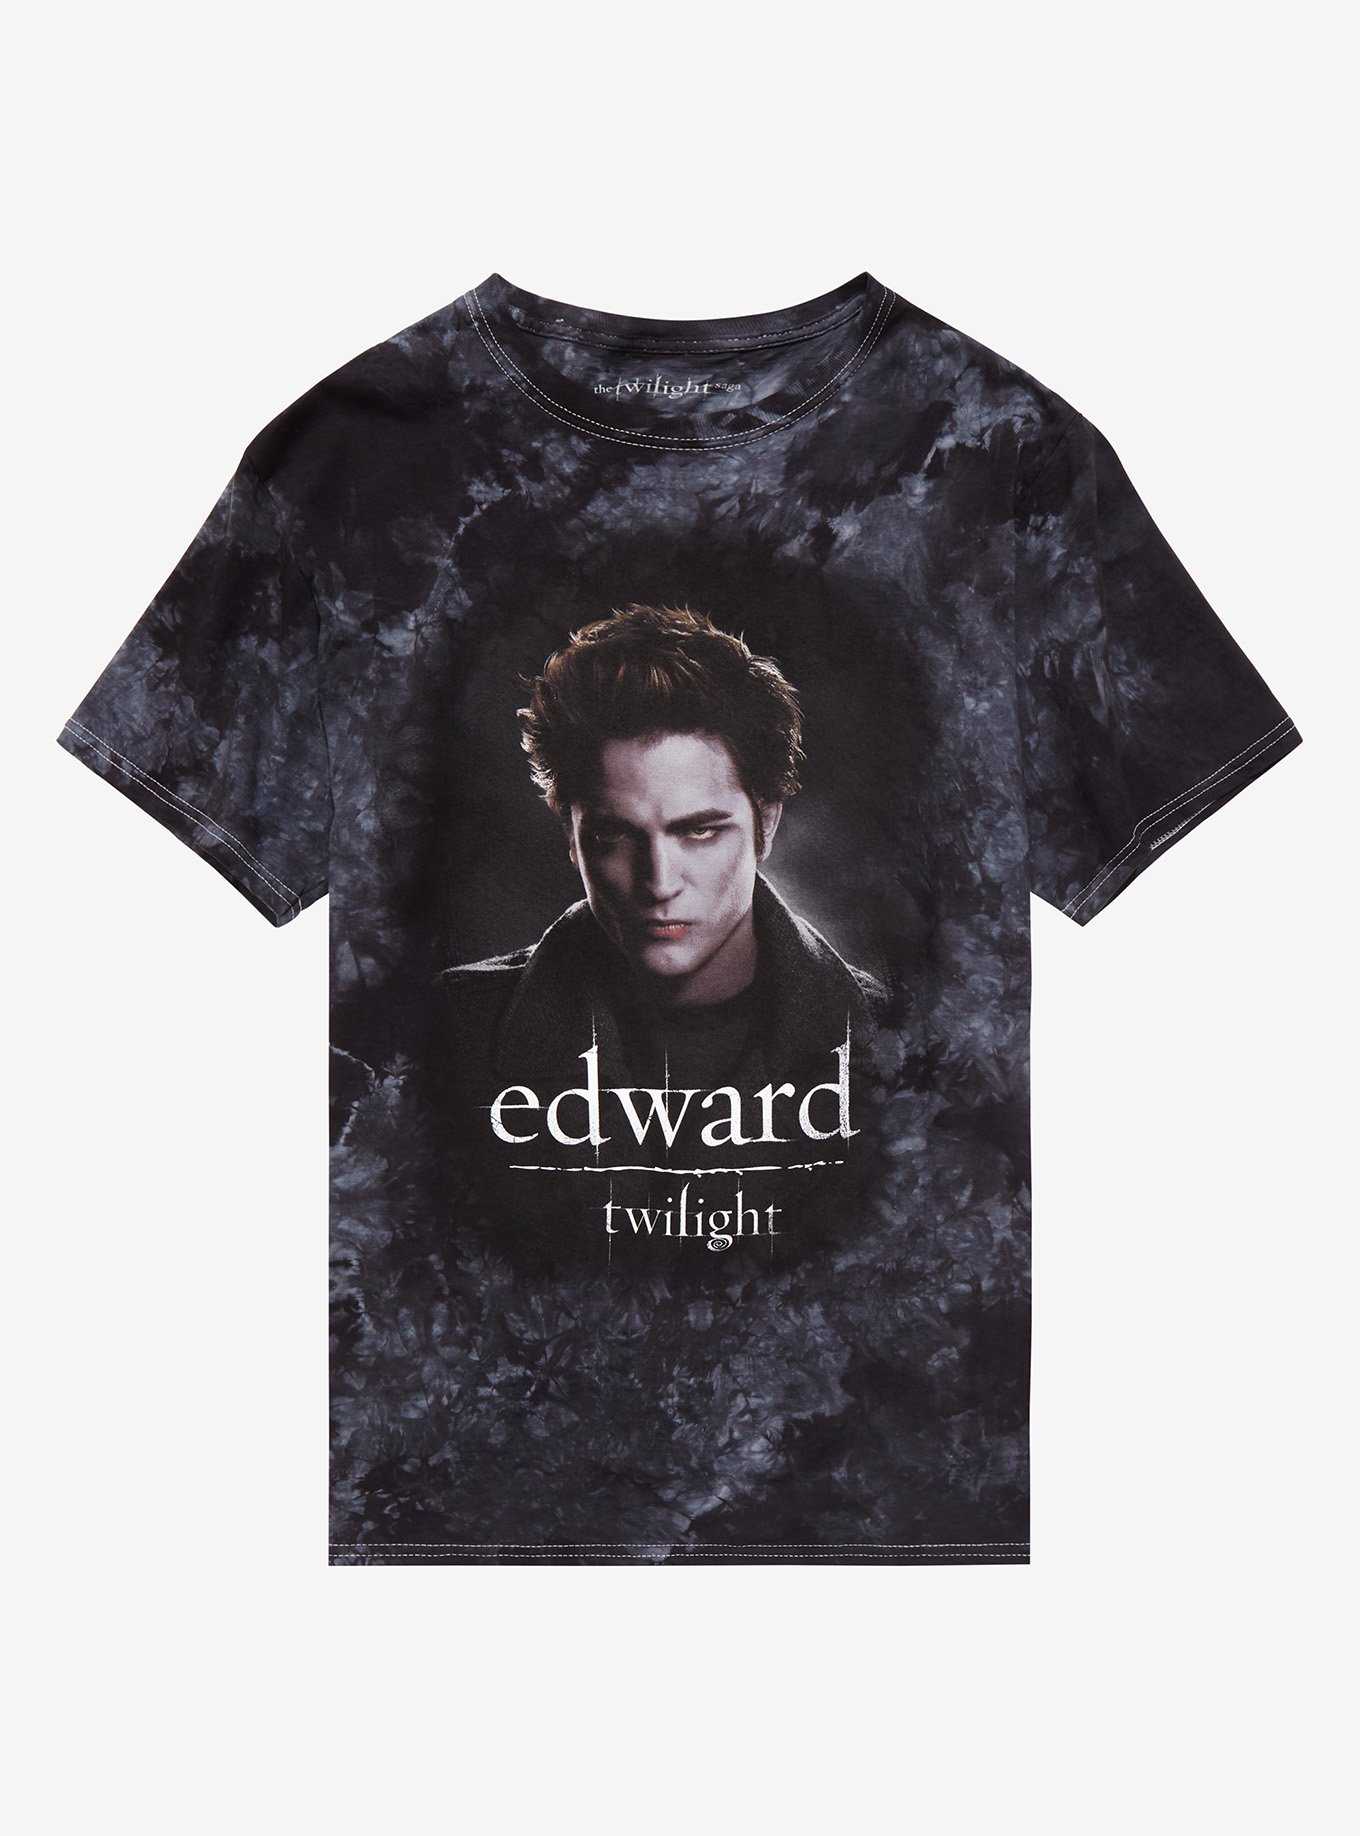 Twilight - New Moon Poster - Adult - T-Shirt - Black - Short Sleeve